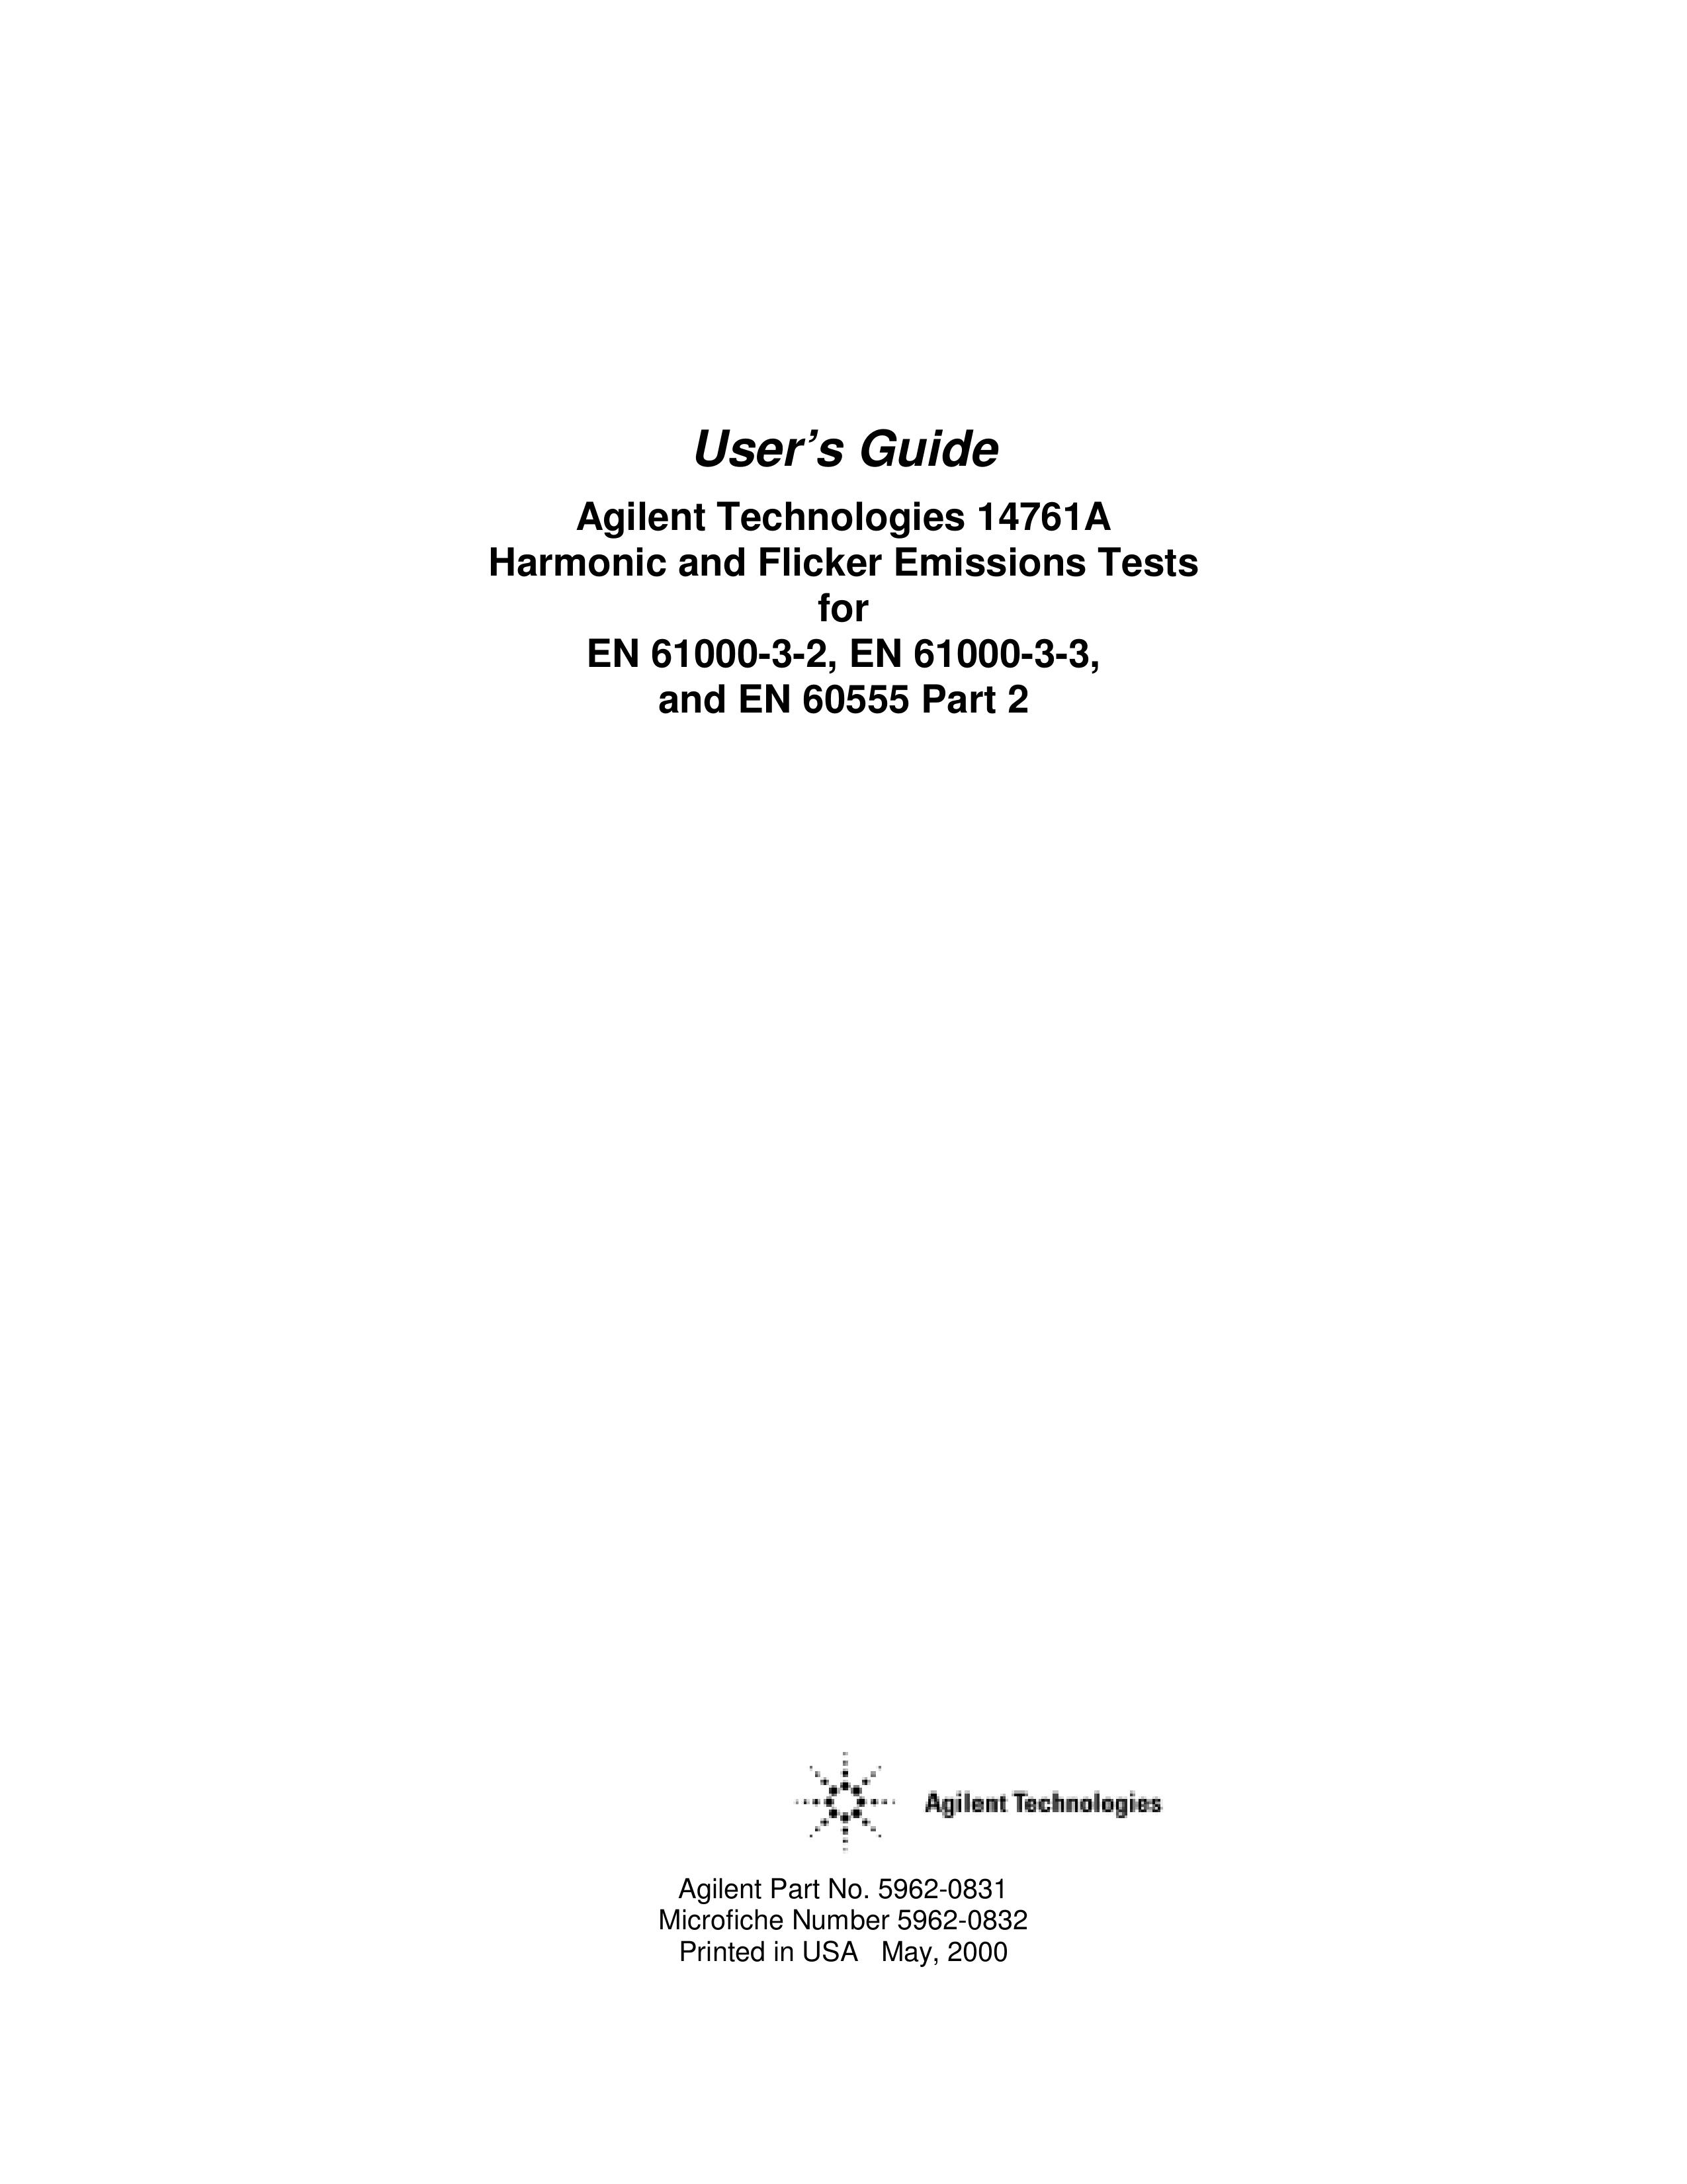 Agilent Technologies EN 60555 Blood Glucose Meter User Manual (Page 1)